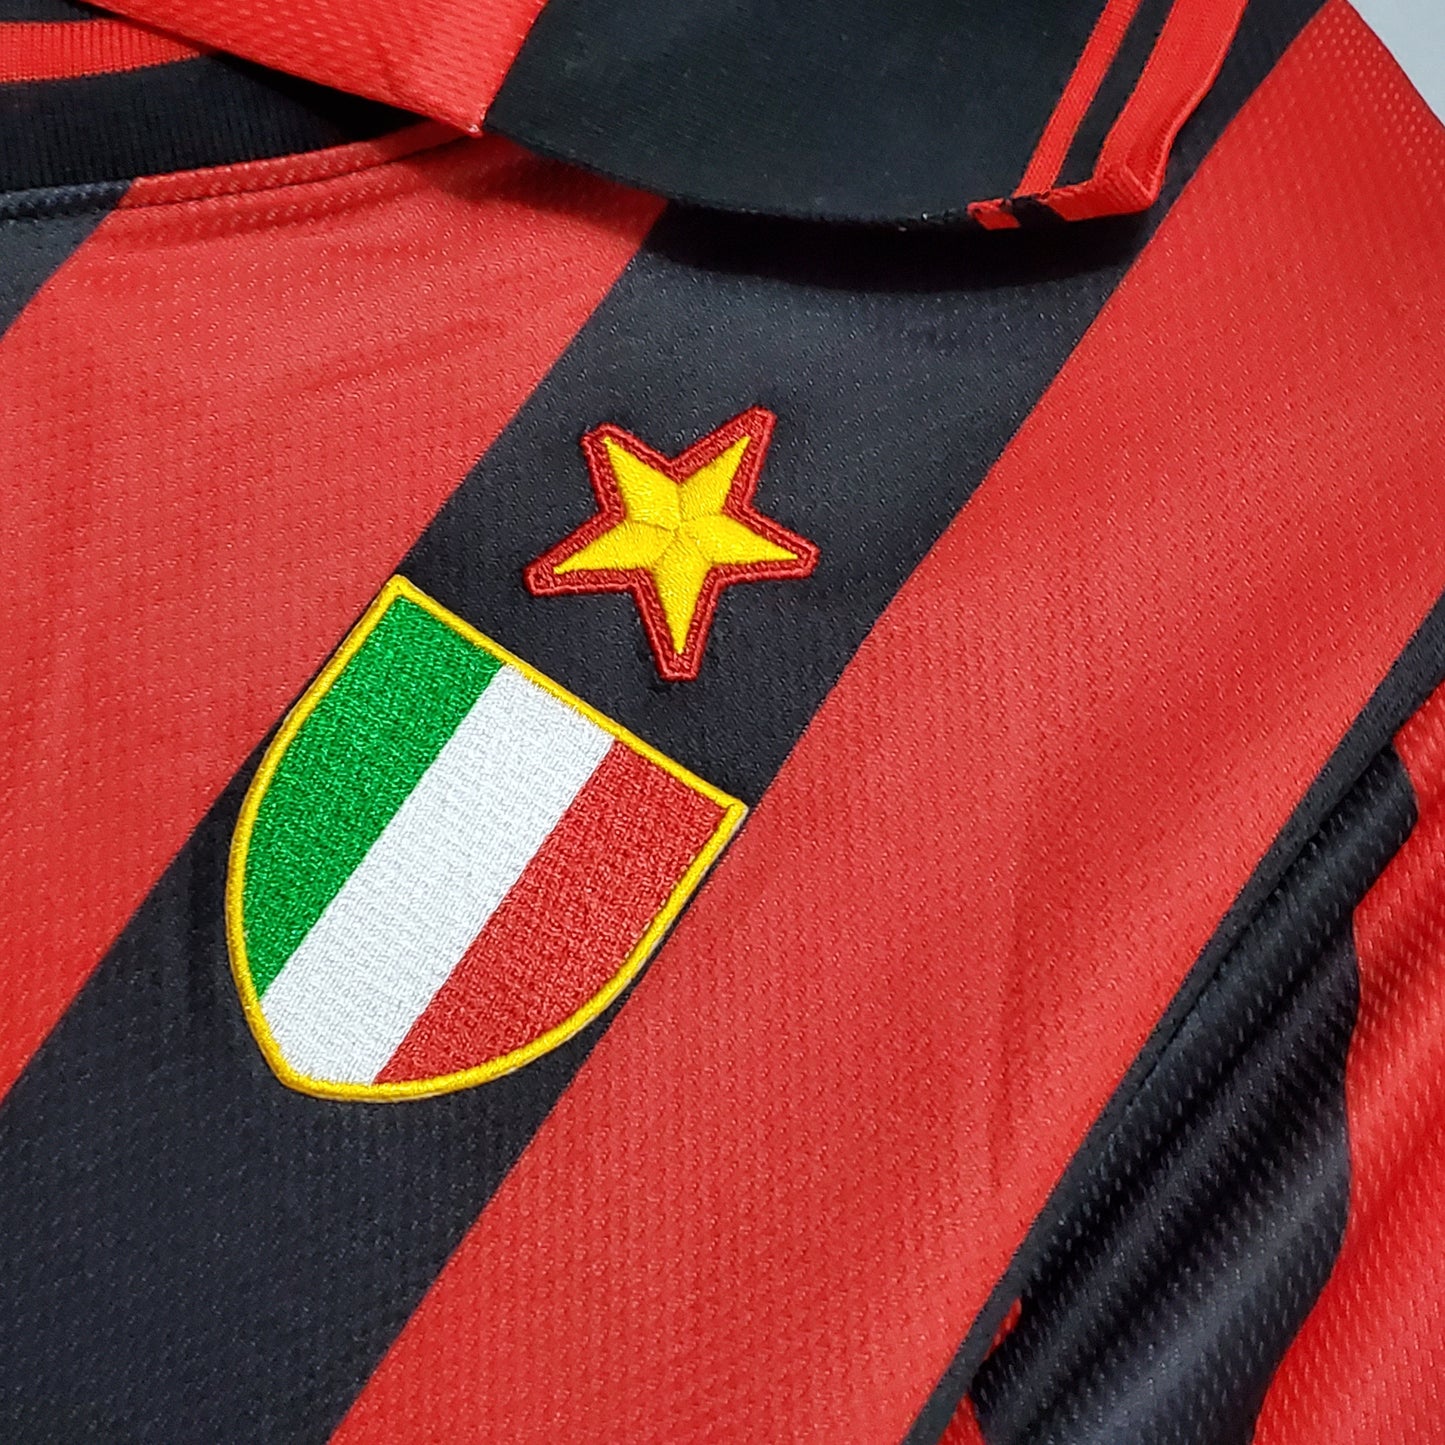 AC Milan 96-97 Home Shirt